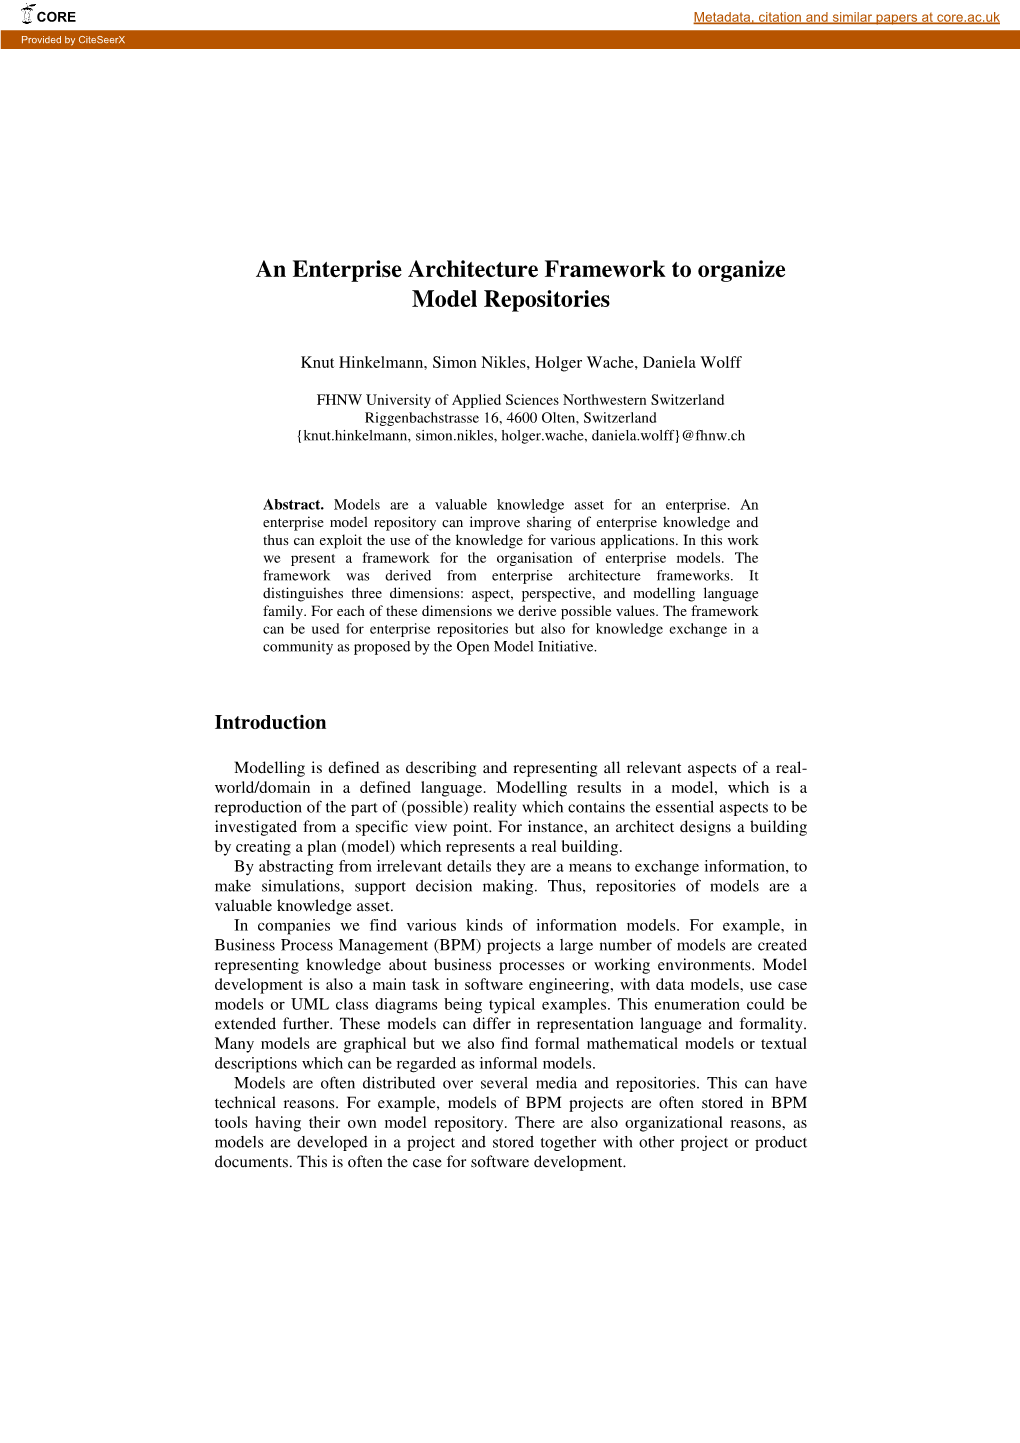 An Enterprise Architecture Framework to Organize Model Repositories